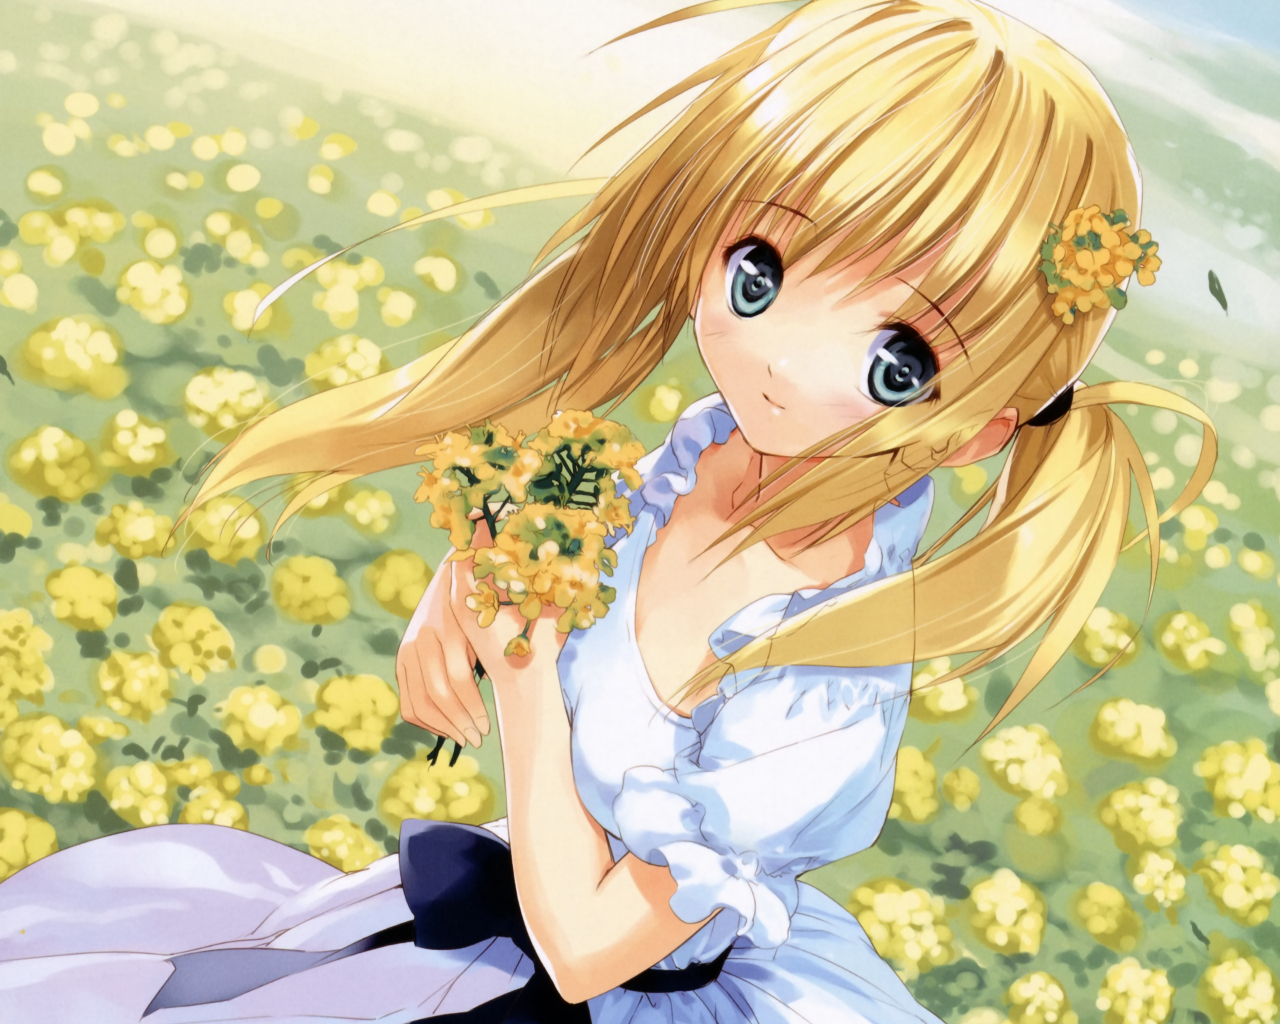 Download 1280x1024 Wallpaper Flower Farm, White Dress, Anime, Cute Girl,  Standard 5:4, Fullscreen, 1280x1024 Hd Image, Background, 18583